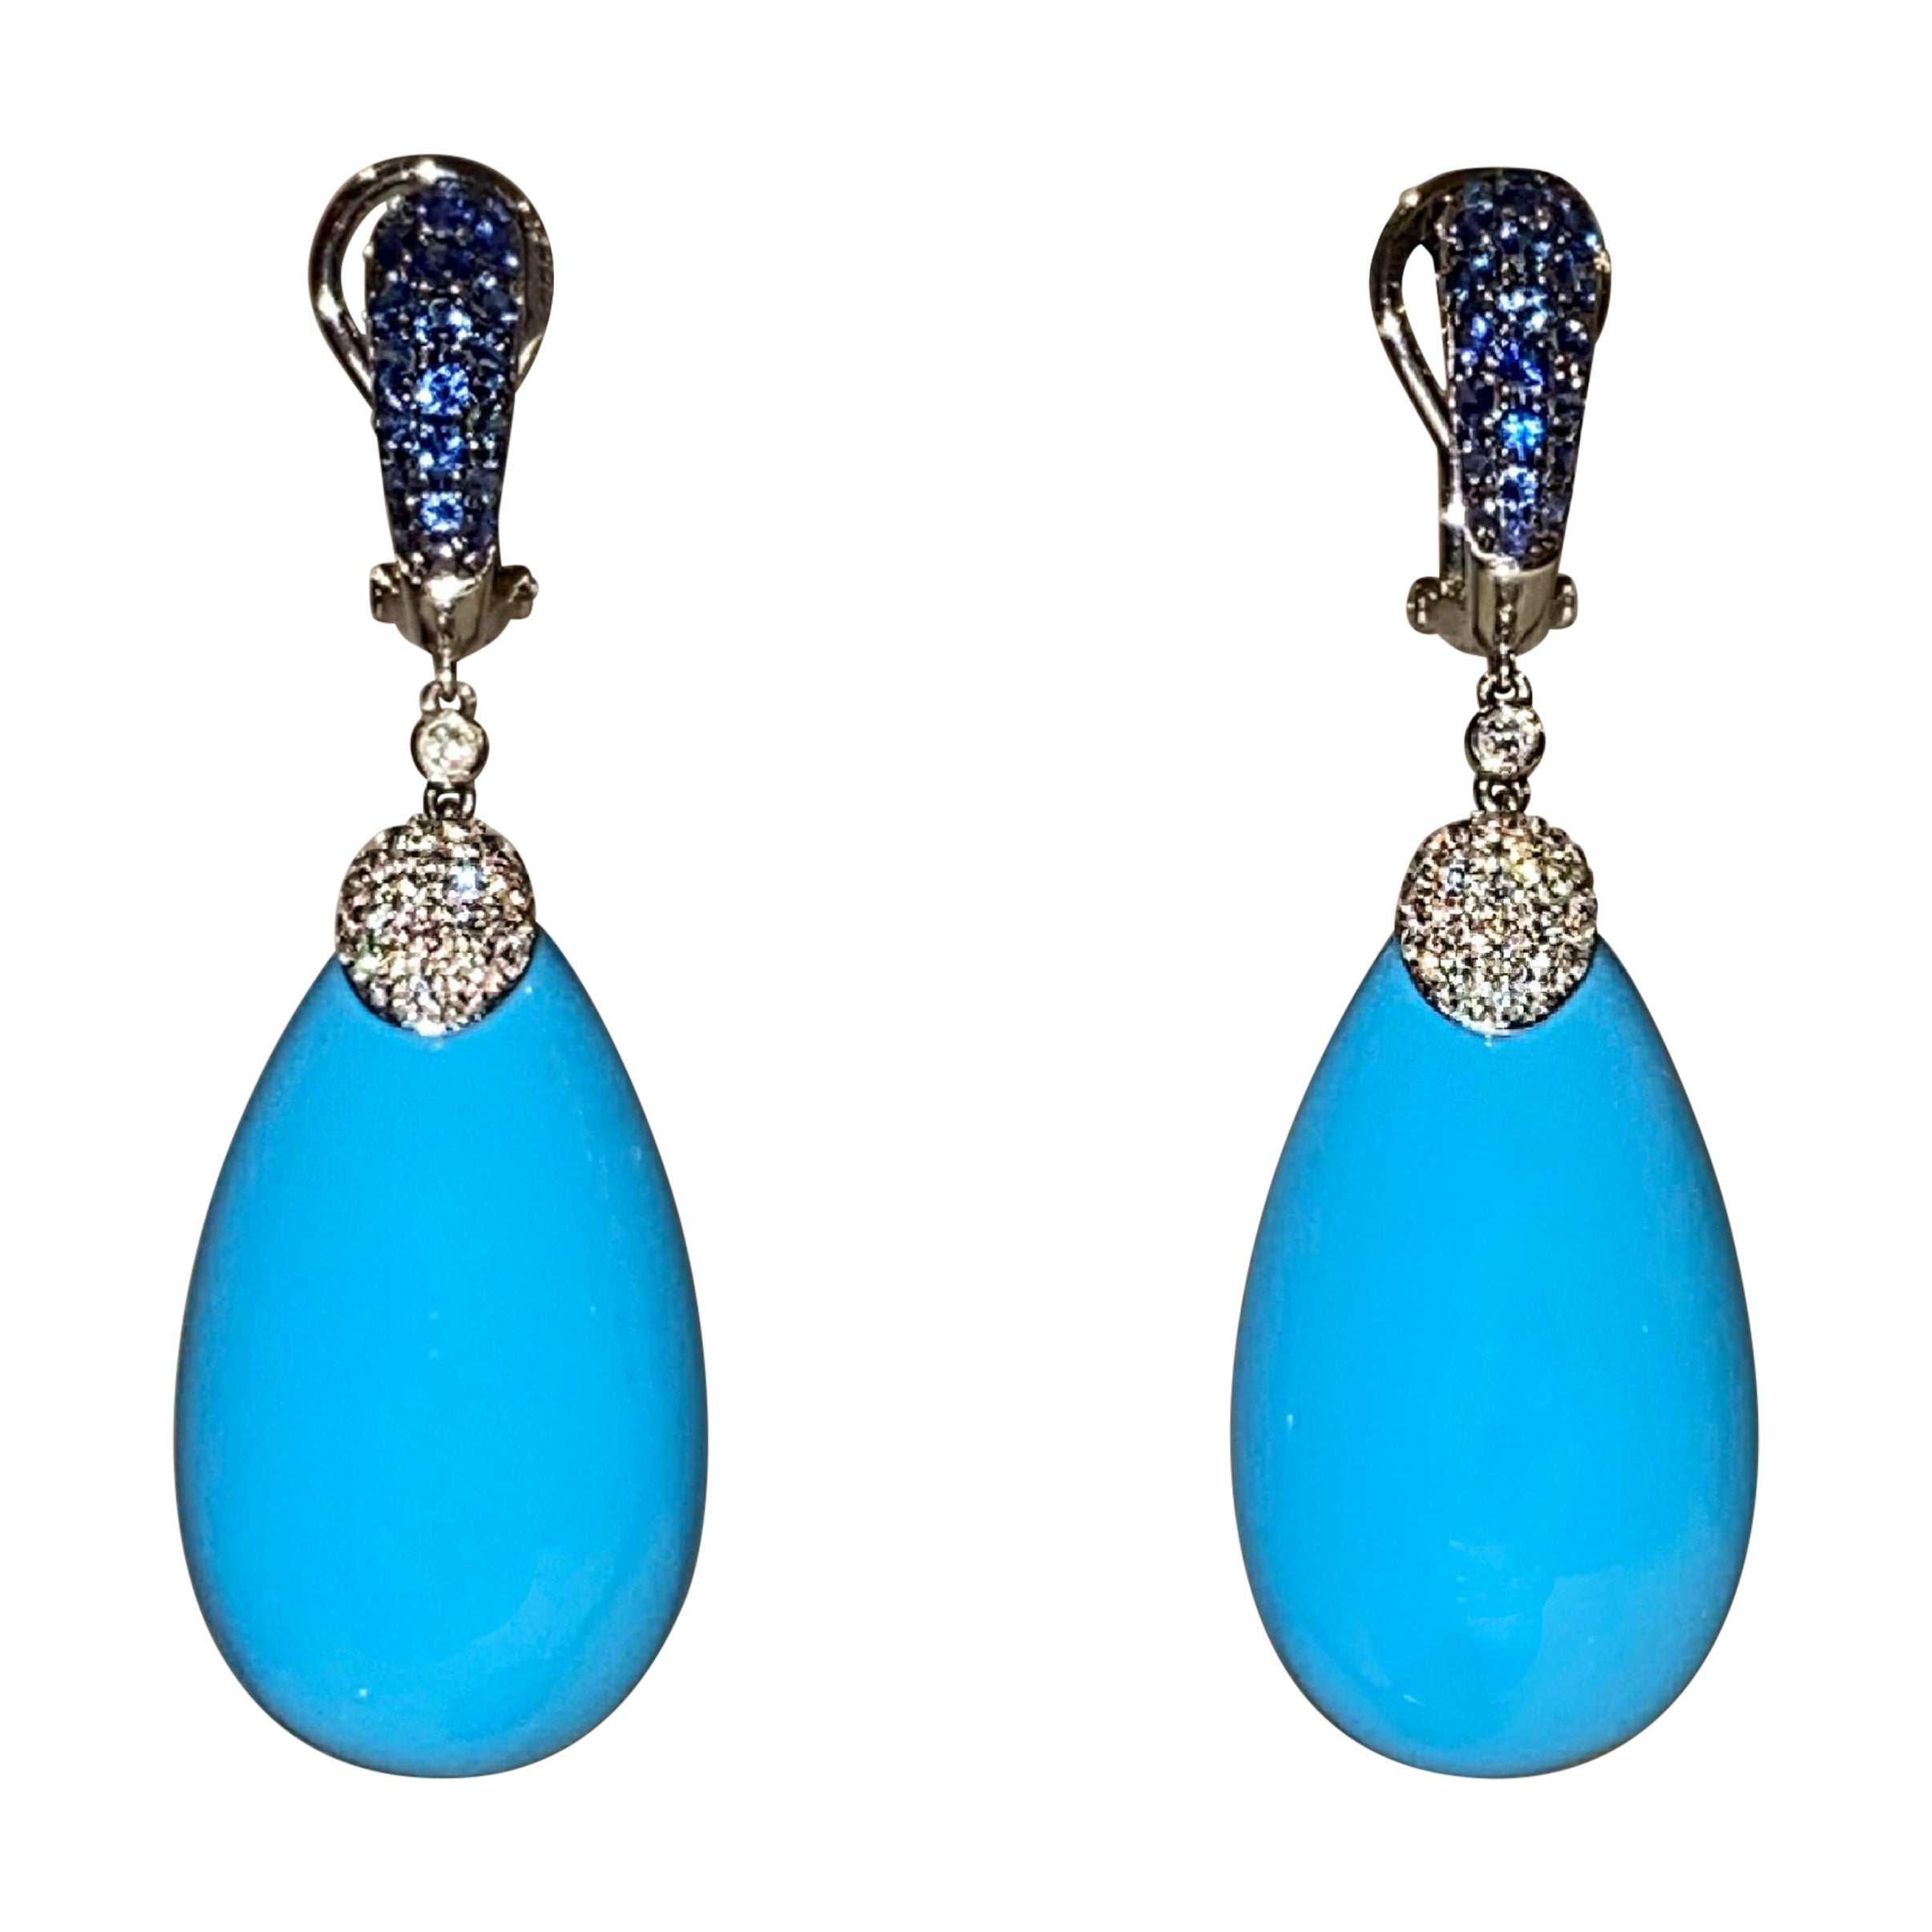 Superb Persian Blue Turquoise Sapphire & Diamond Pendant Earrings in 18K Gold